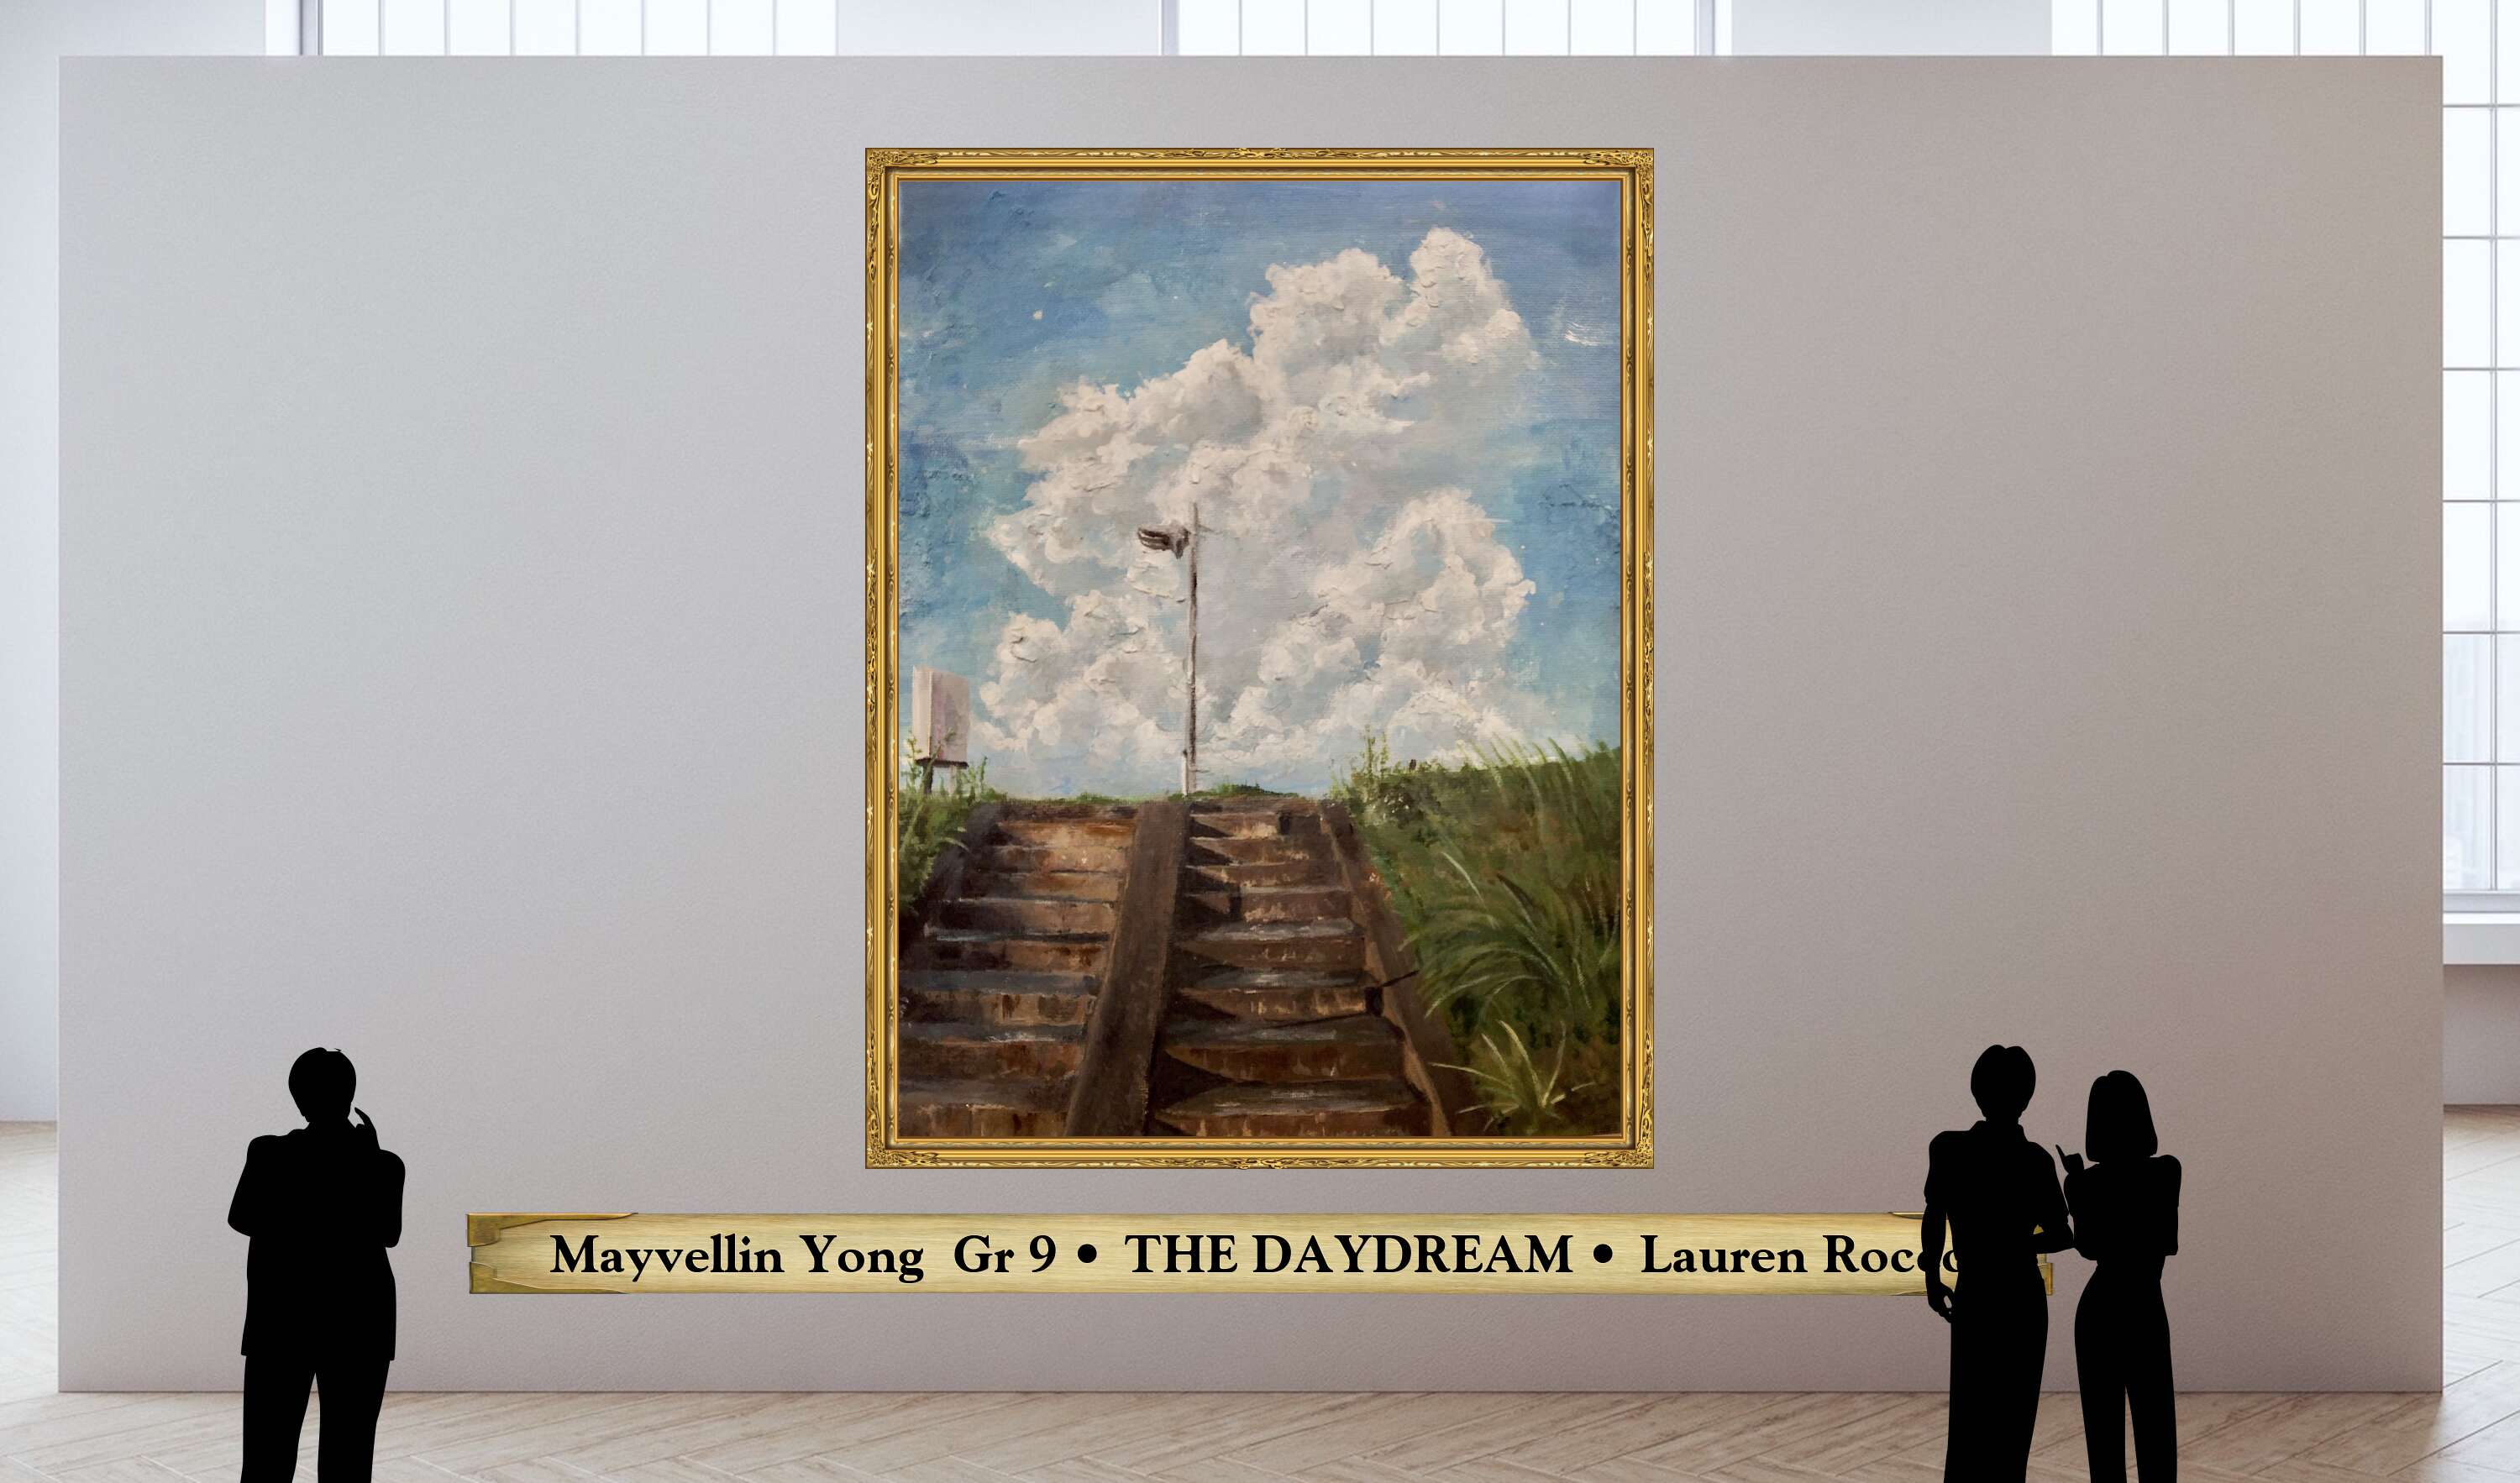 Mayvellin Yong  Gr 9 • THE DAYDREAM • Lauren Rocco